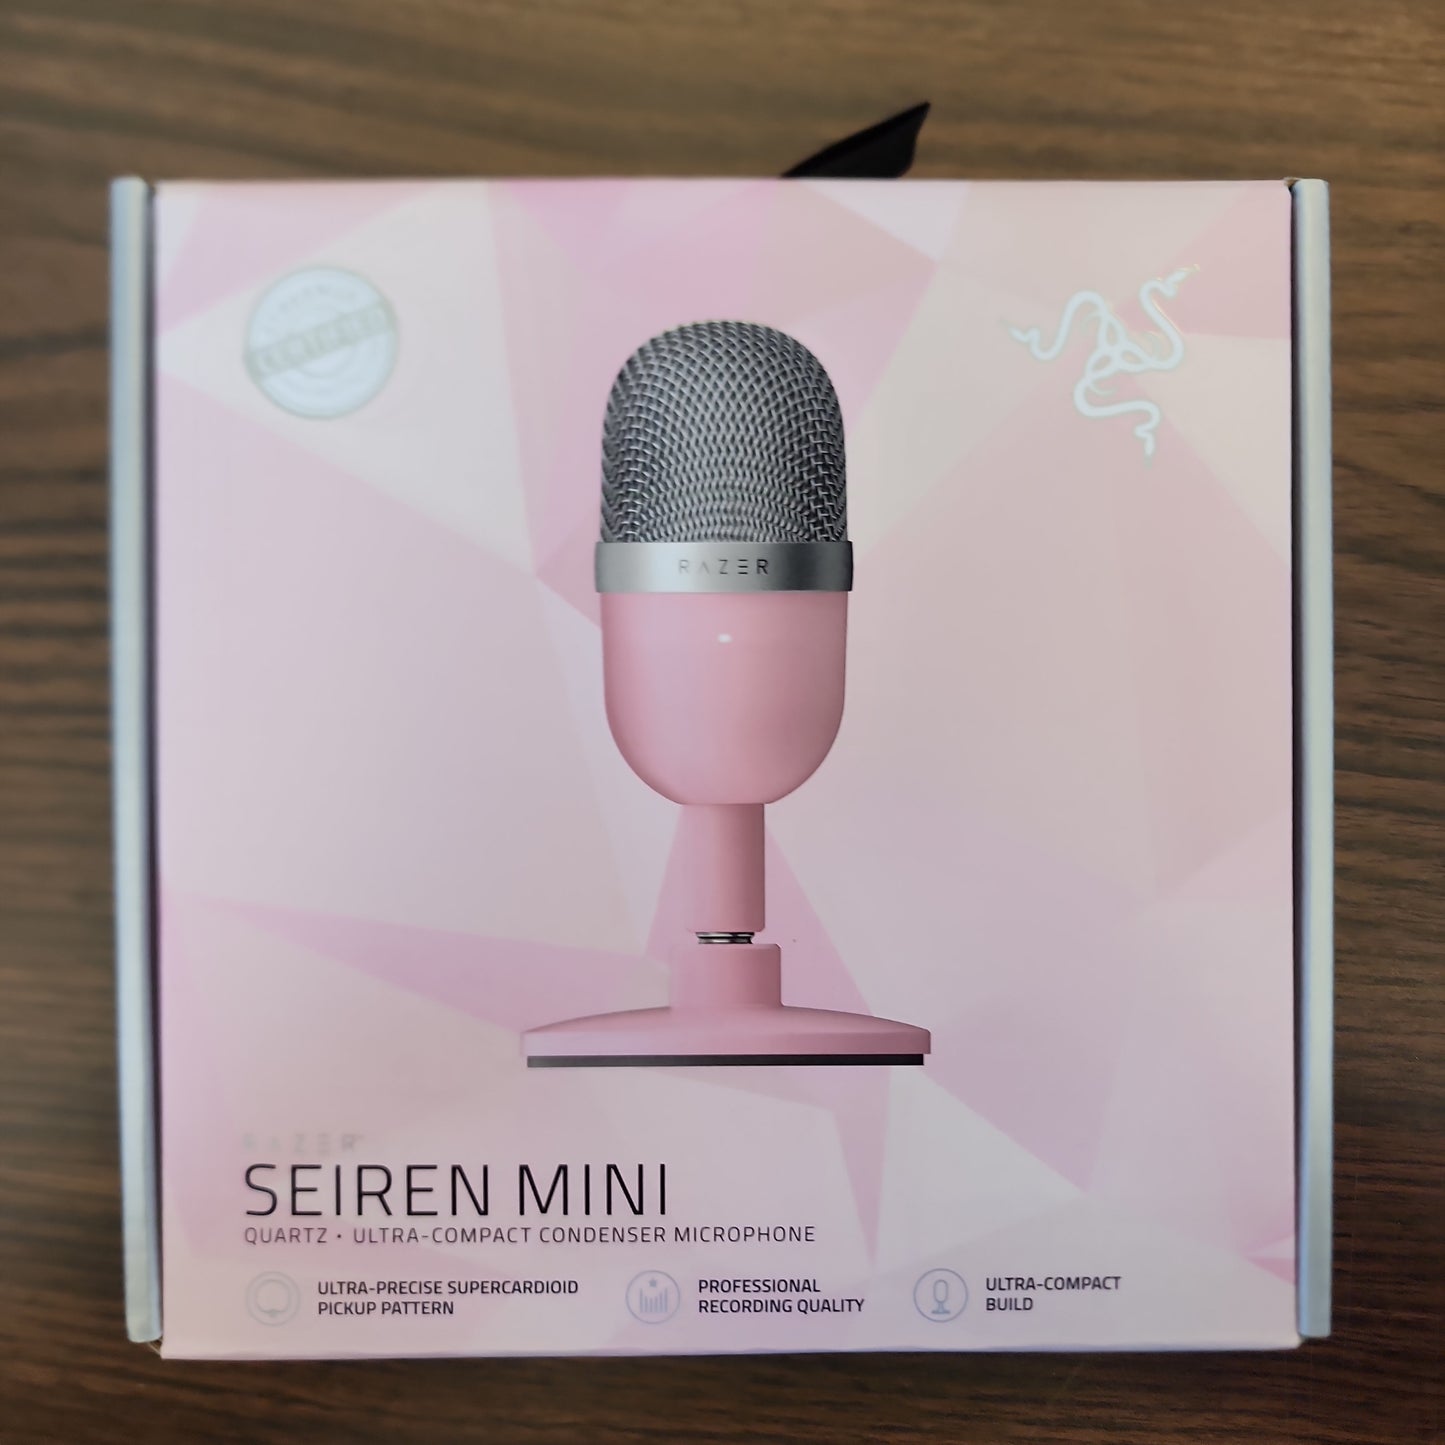 Razer Seiren Mini Condensor Microphone